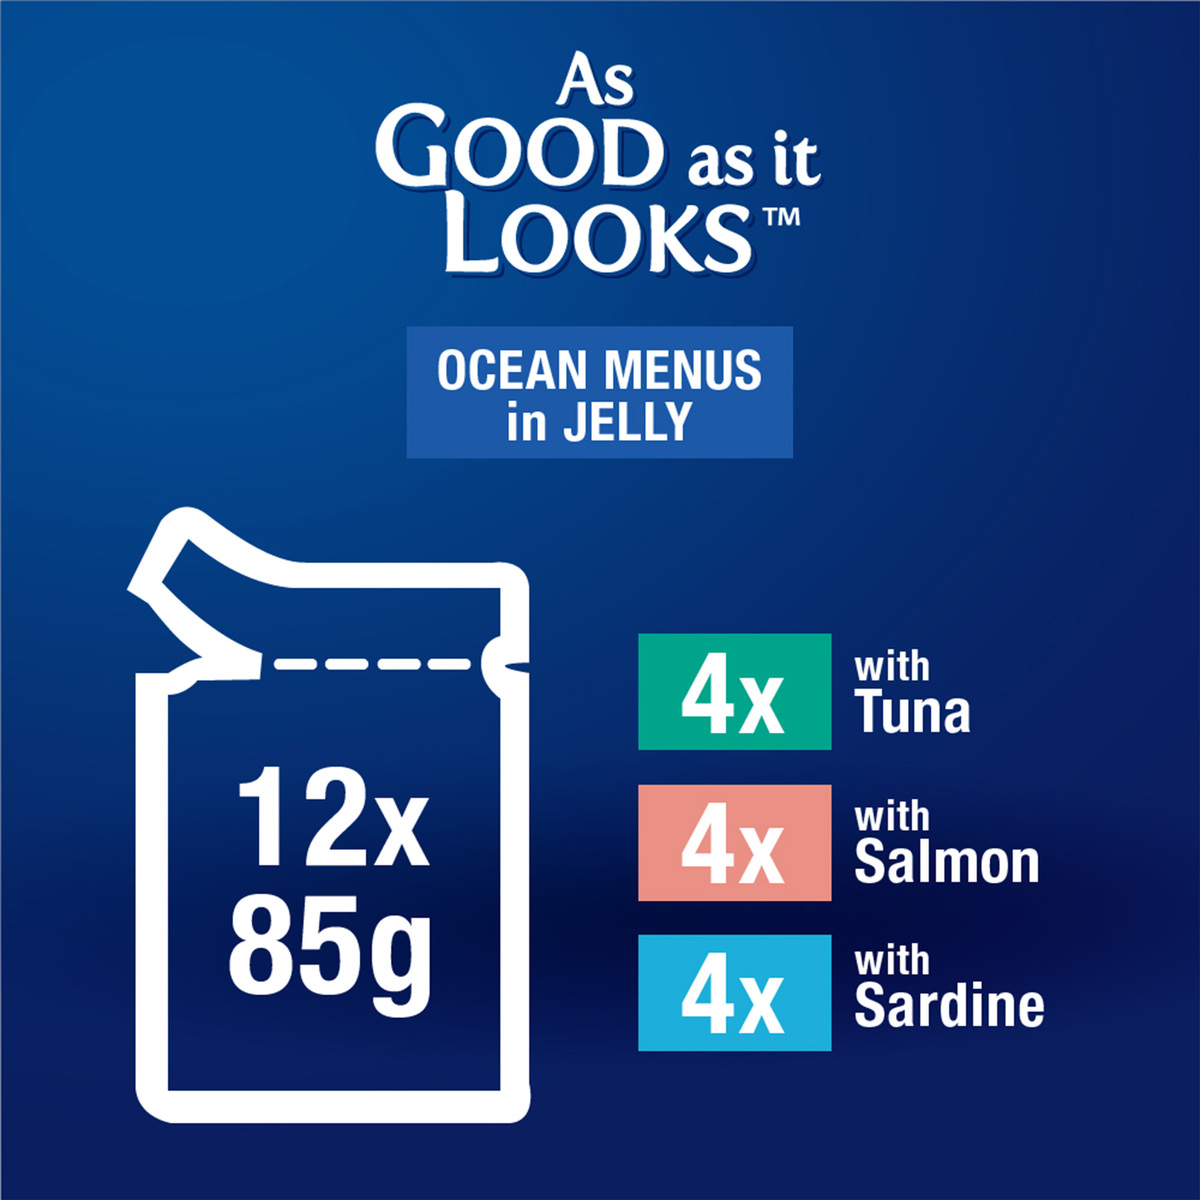 Purina Felix As Good As It Looks Ocean Menus In Jelly ( Tuna, Salmon, Sardine ) 12 x 85 g